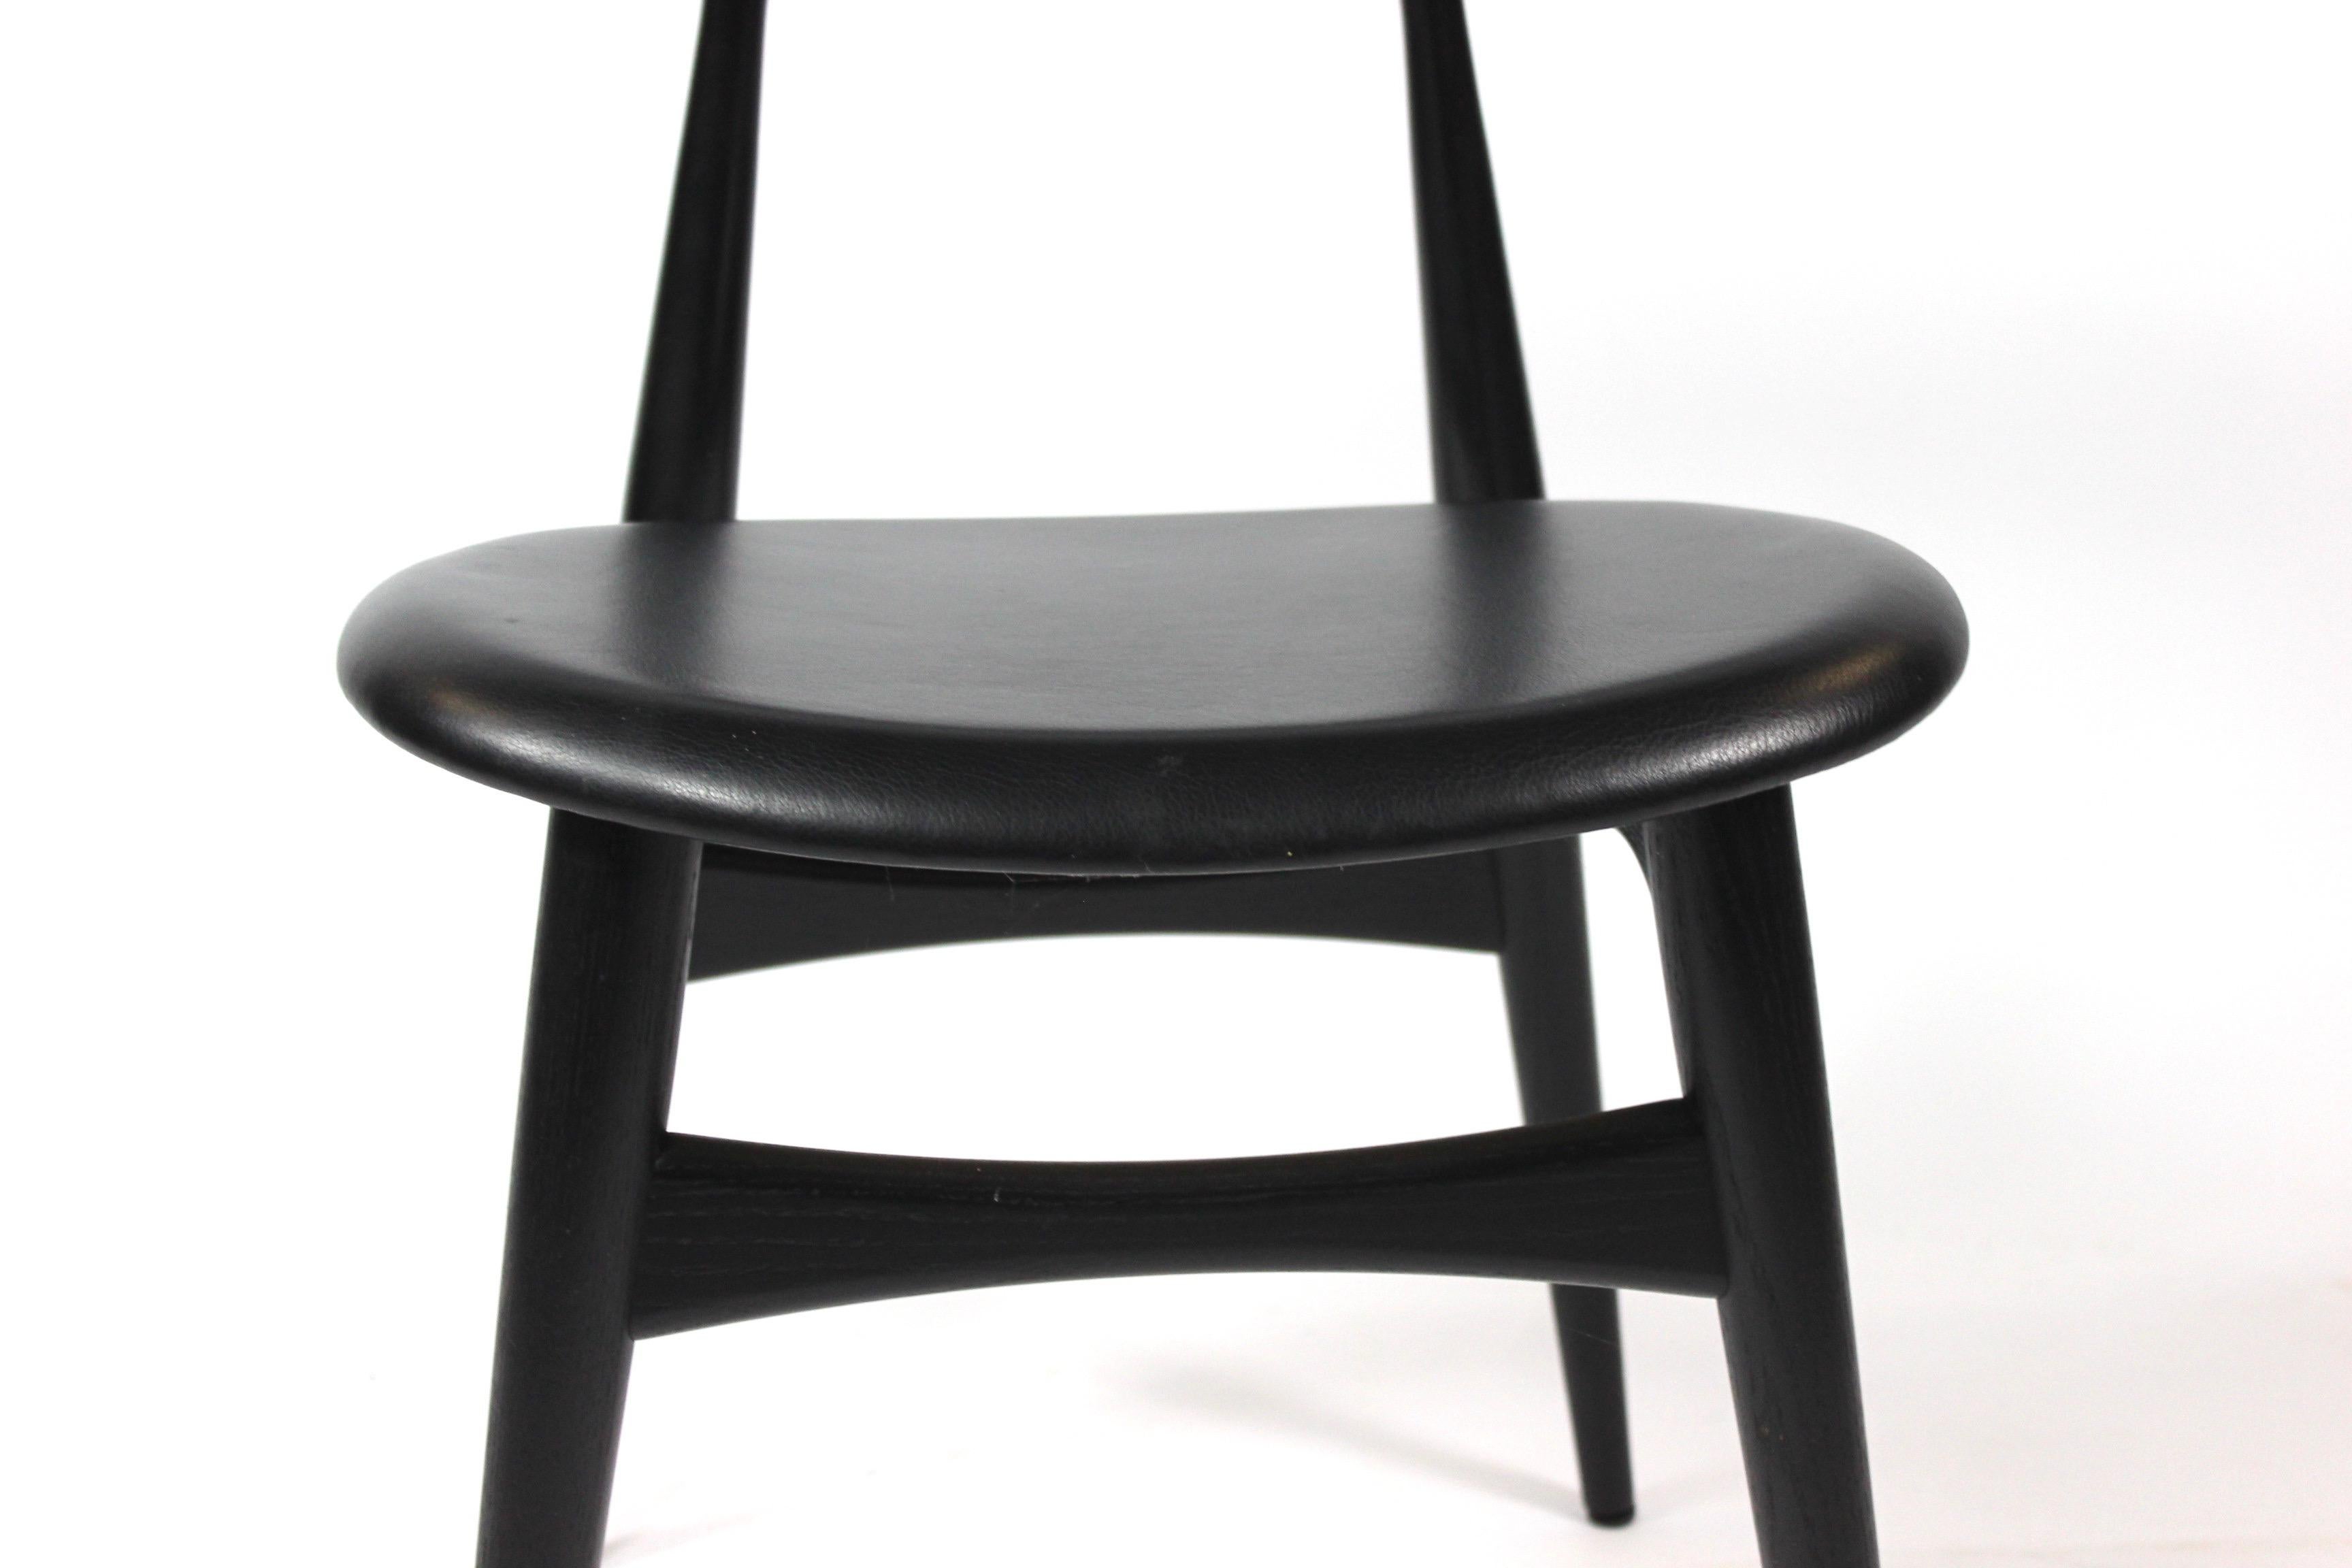 Scandinavian Modern Set of Four Dining Room Chairs, Model CH33T, by Hans J. Wegner, 2012